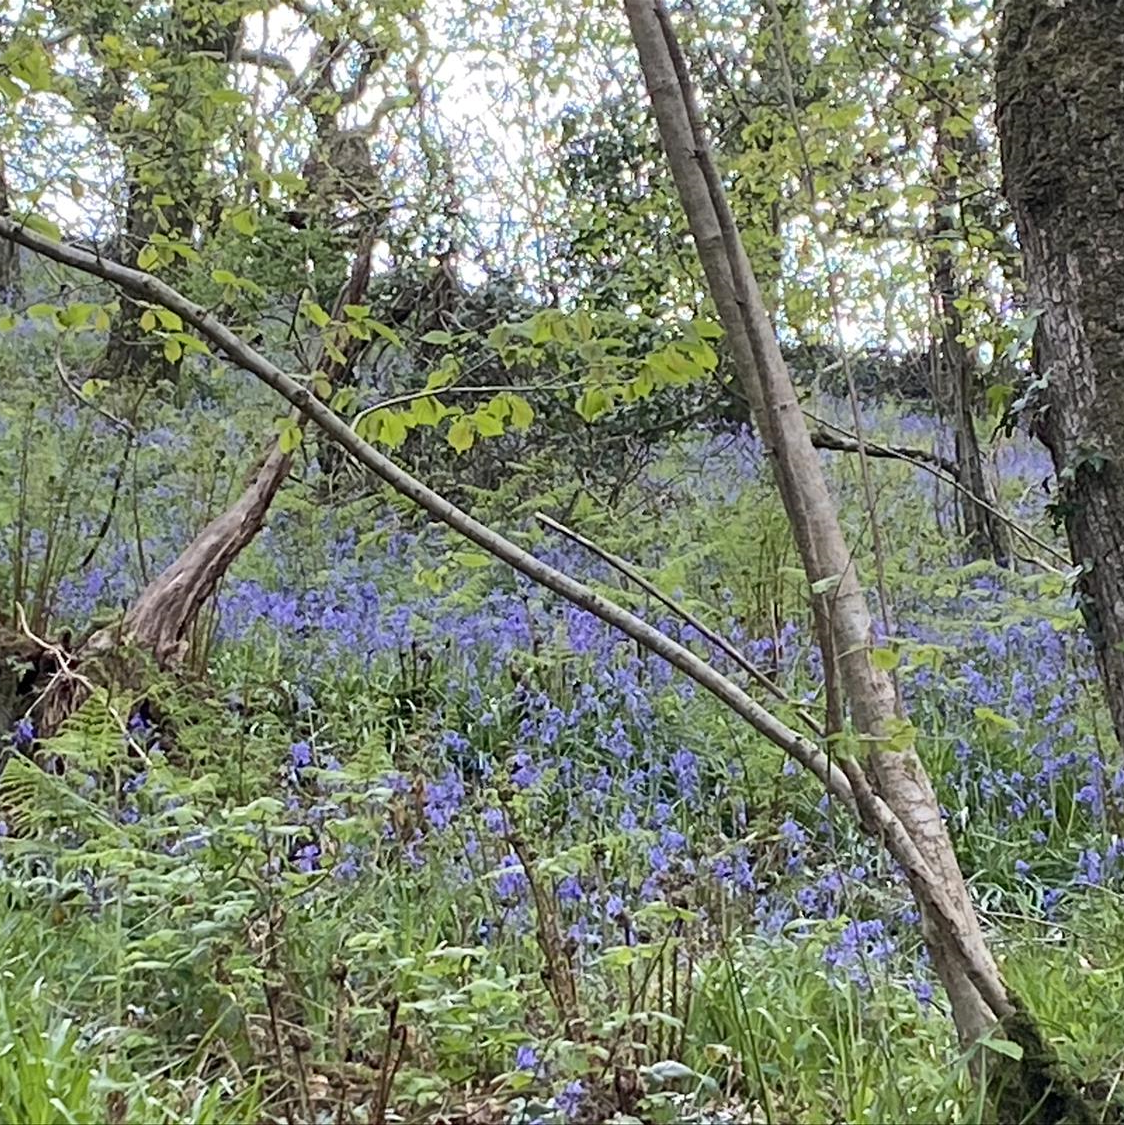 Bluebells in amongst the trees in Minster Wood, Boscastle, Cornwall